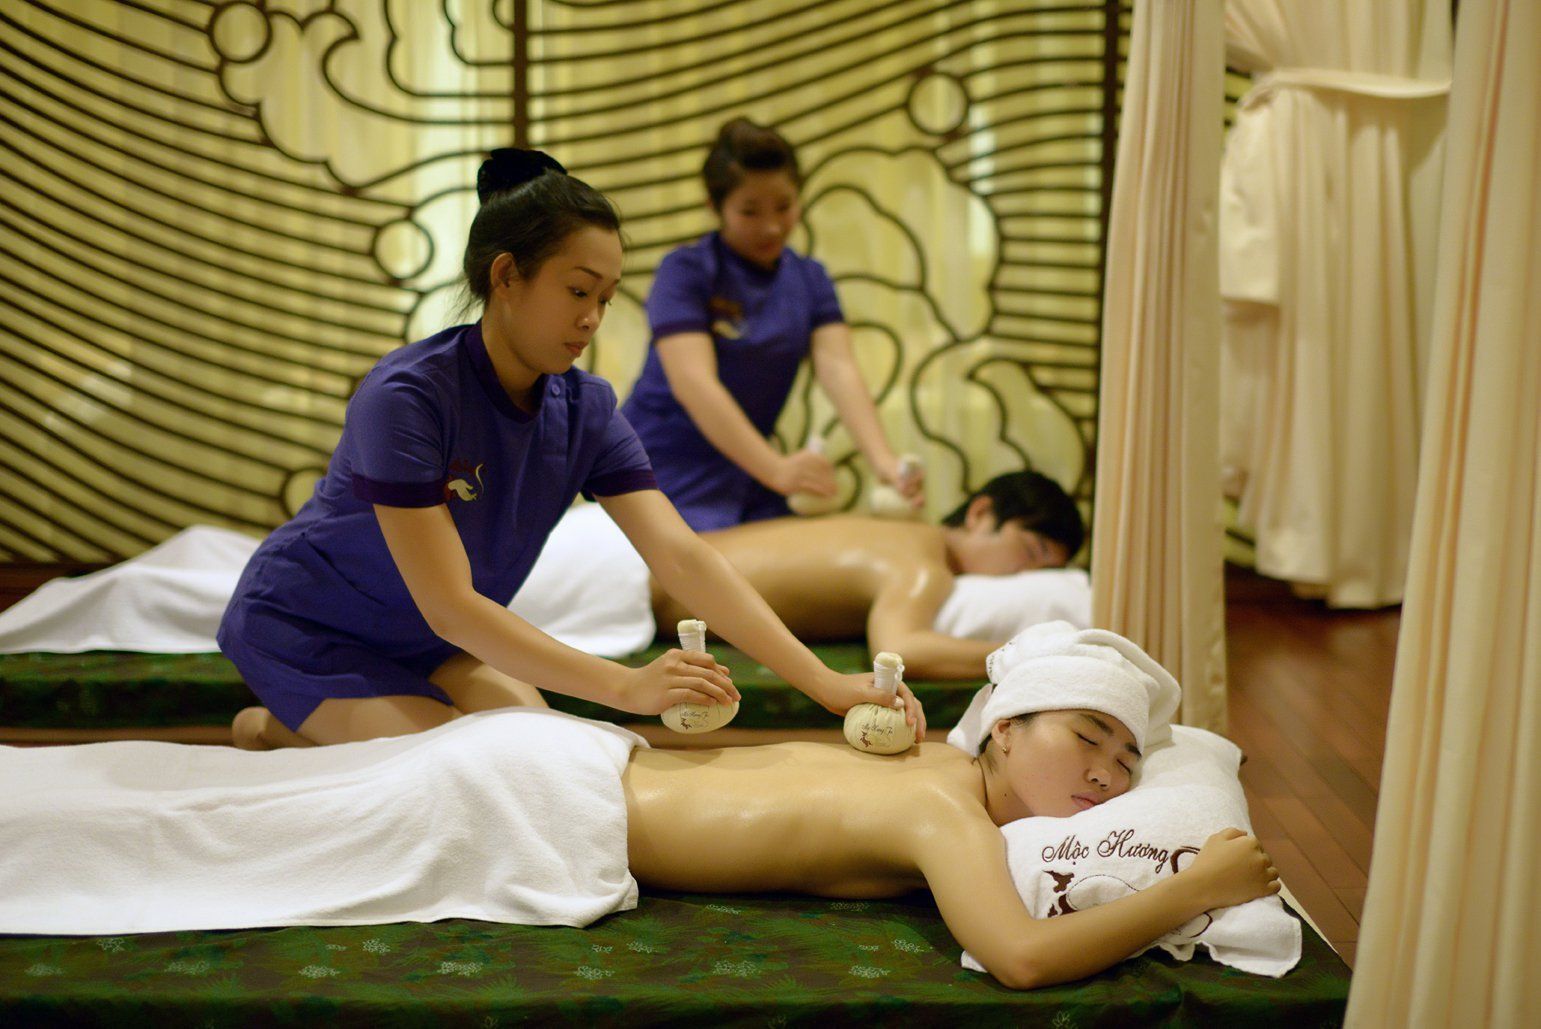 Upscale erotic massage asia